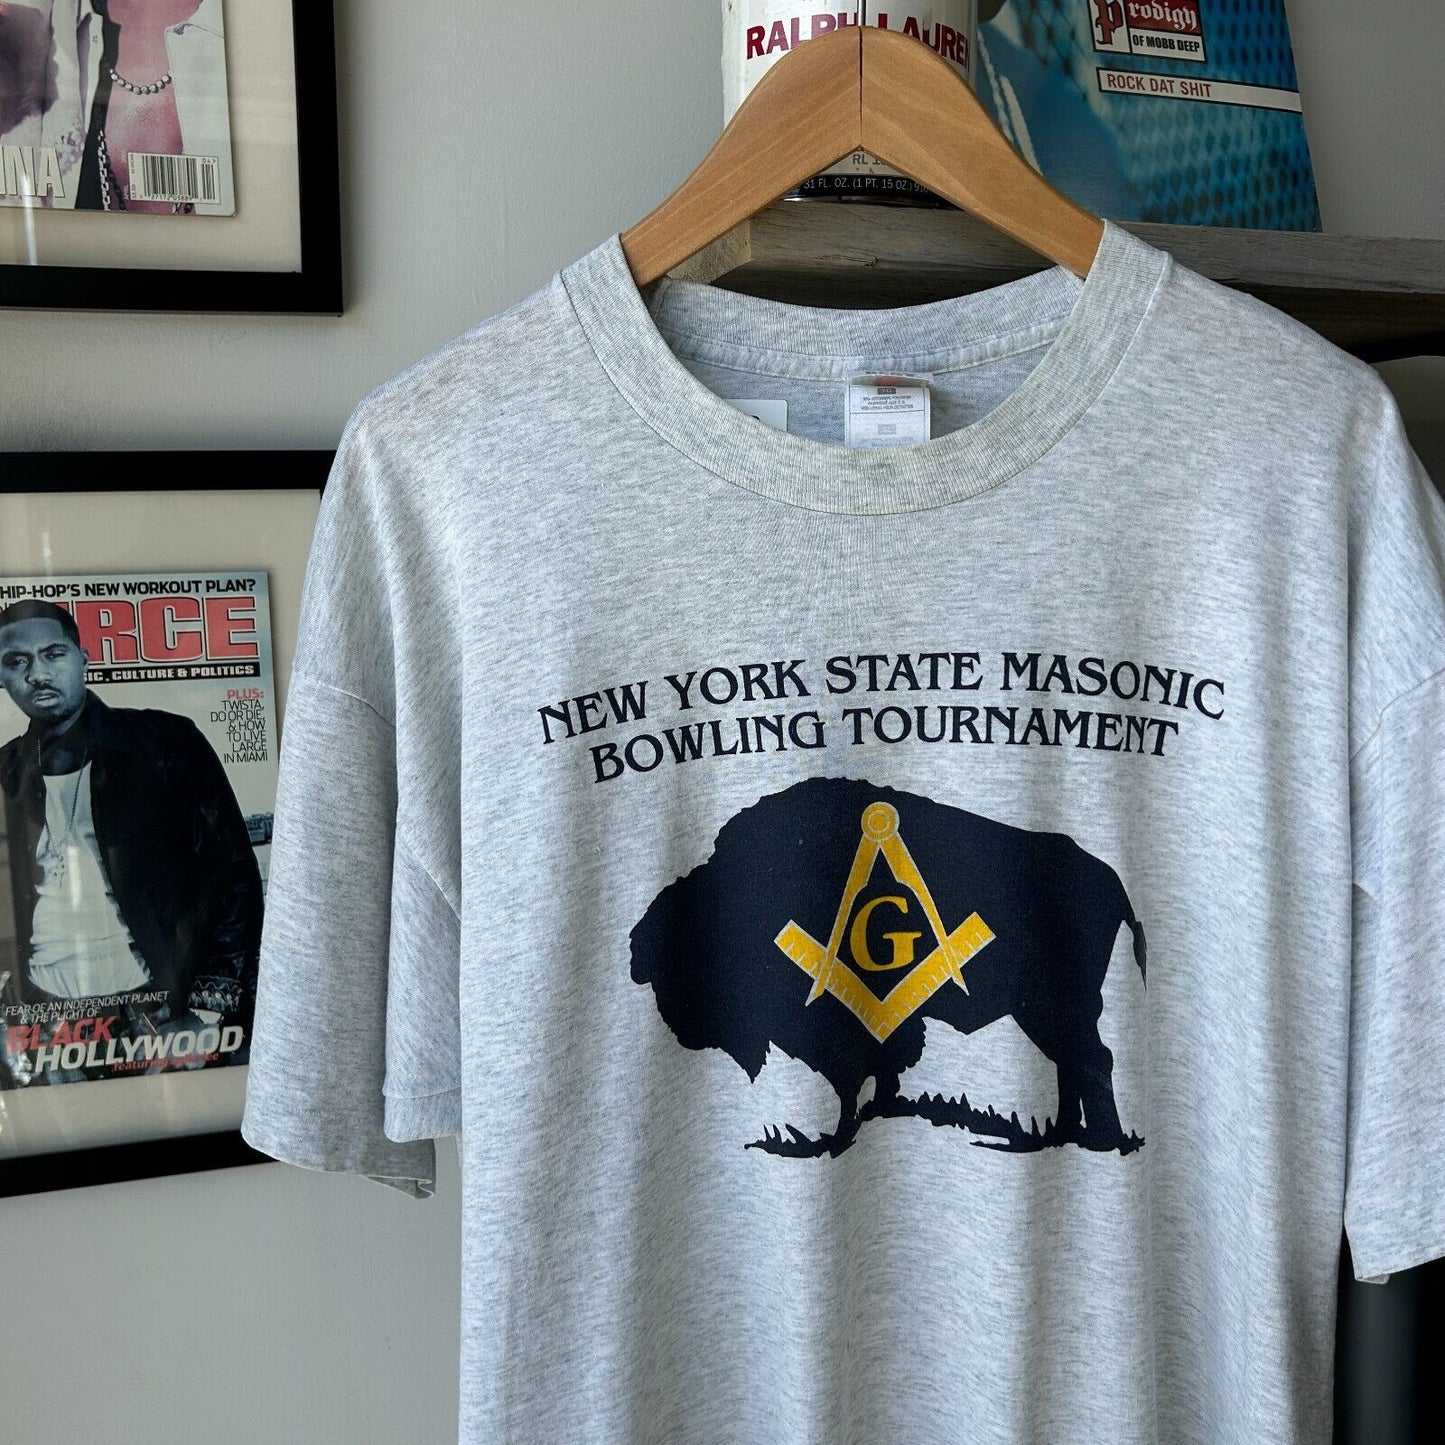 VINTAGE 90s | New York State Bowling Tournament T-Shirt sz XL Adult